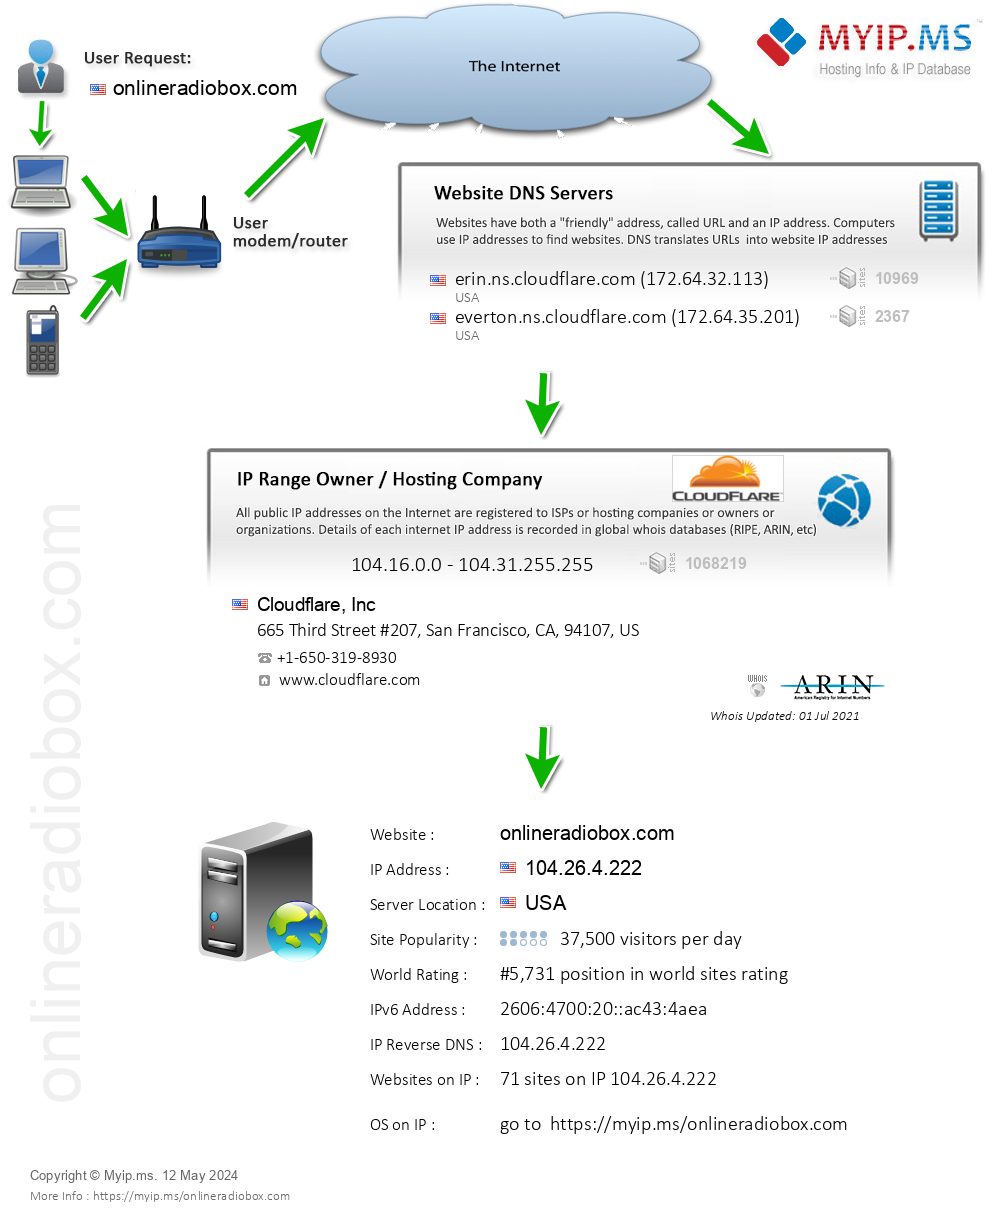 Onlineradiobox.com - Website Hosting Visual IP Diagram